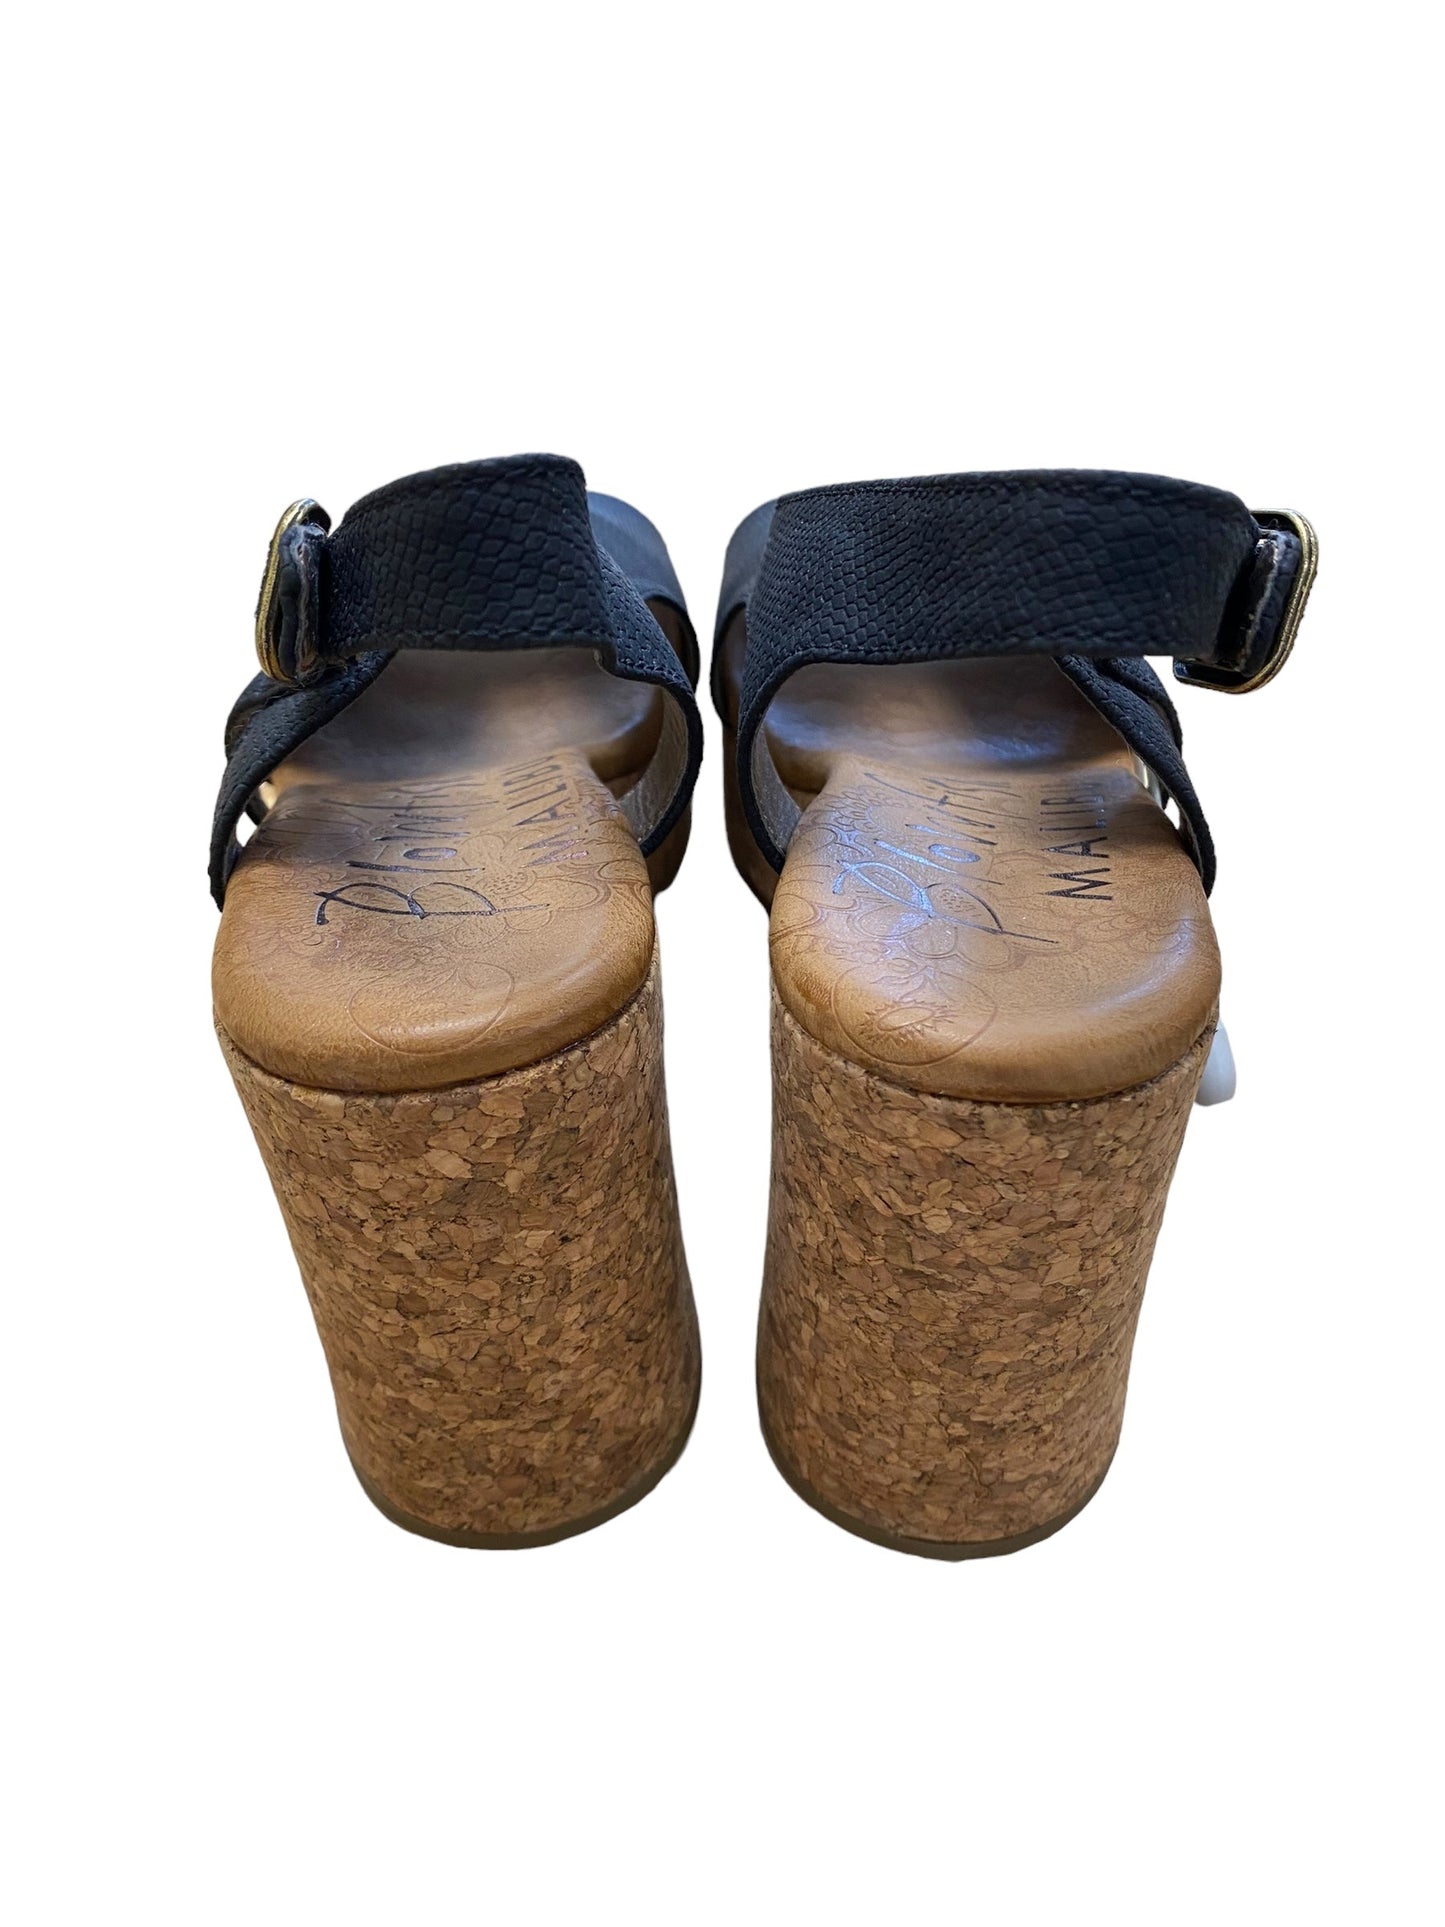 Brown Shoes Heels Block Blowfish, Size 9